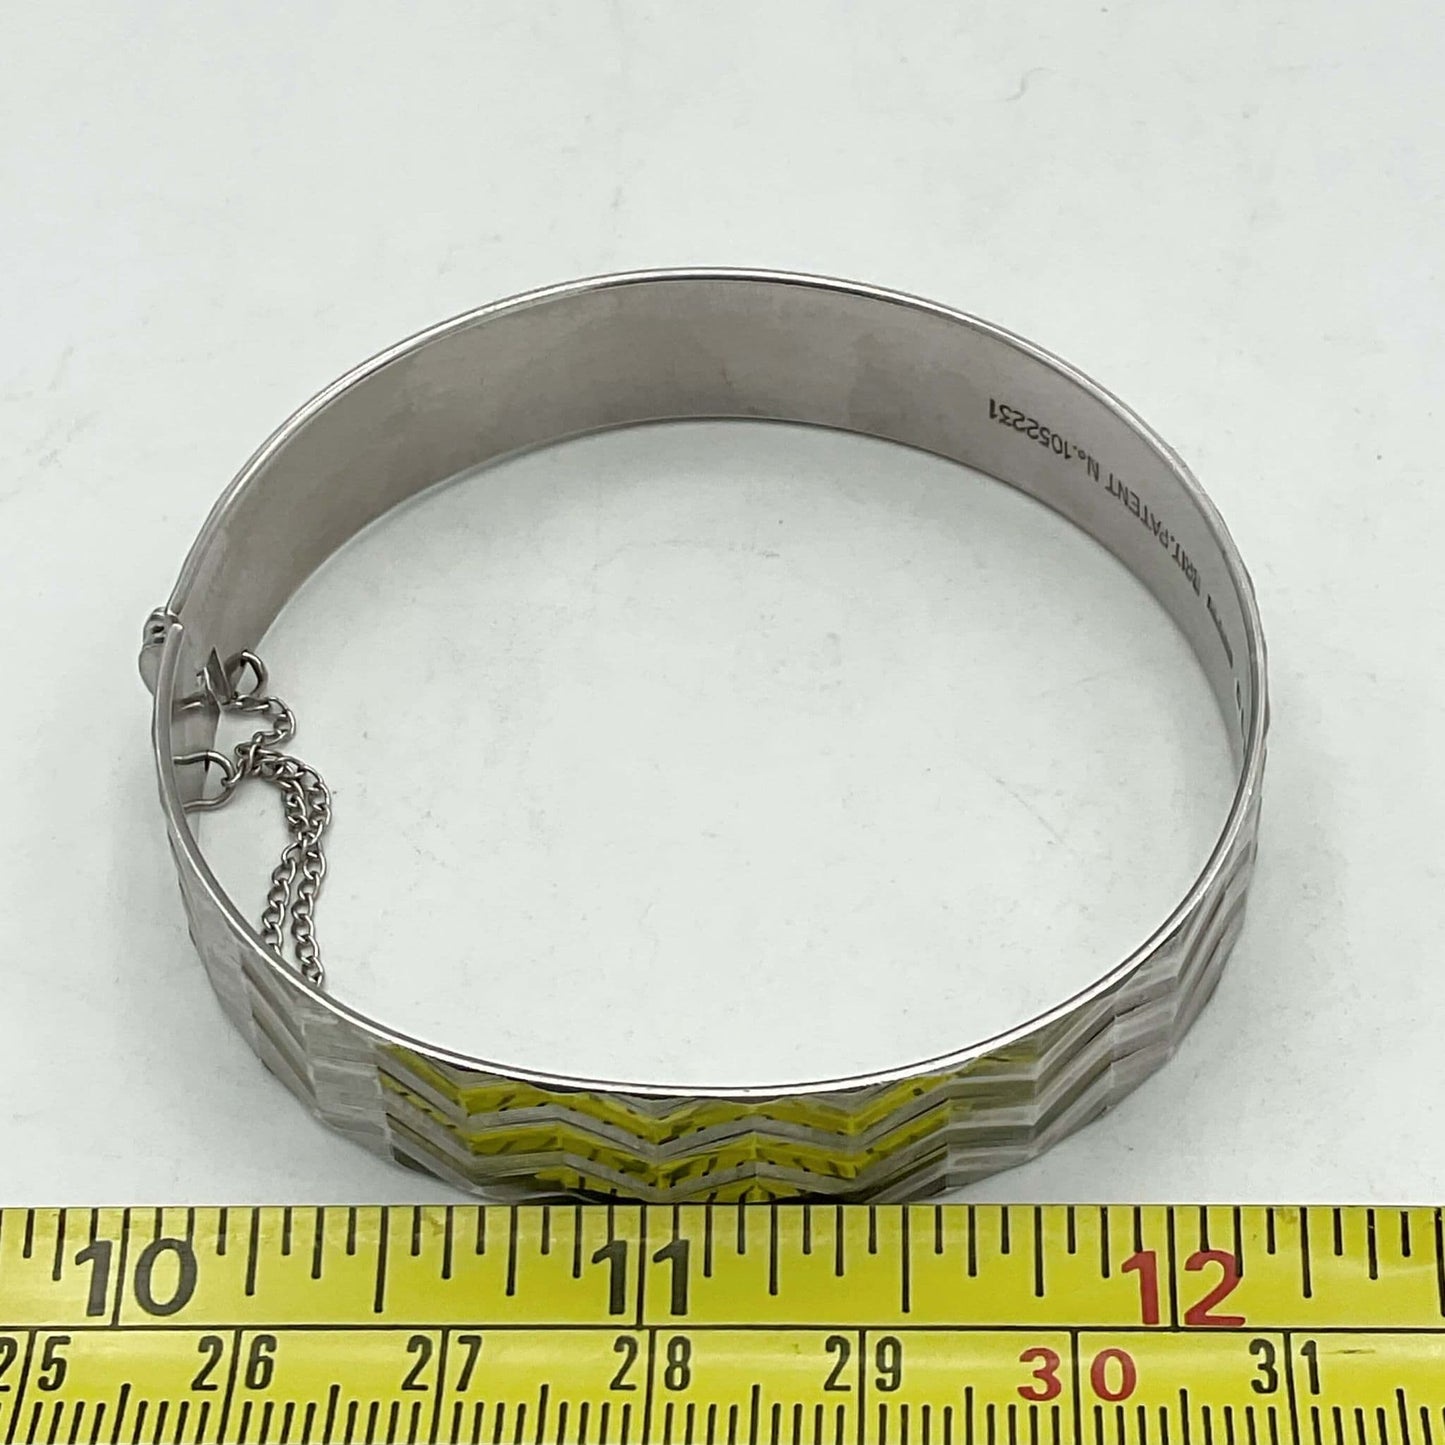 Zig zag design bracelet next to tape measure showing width as appropriately 6.5cm